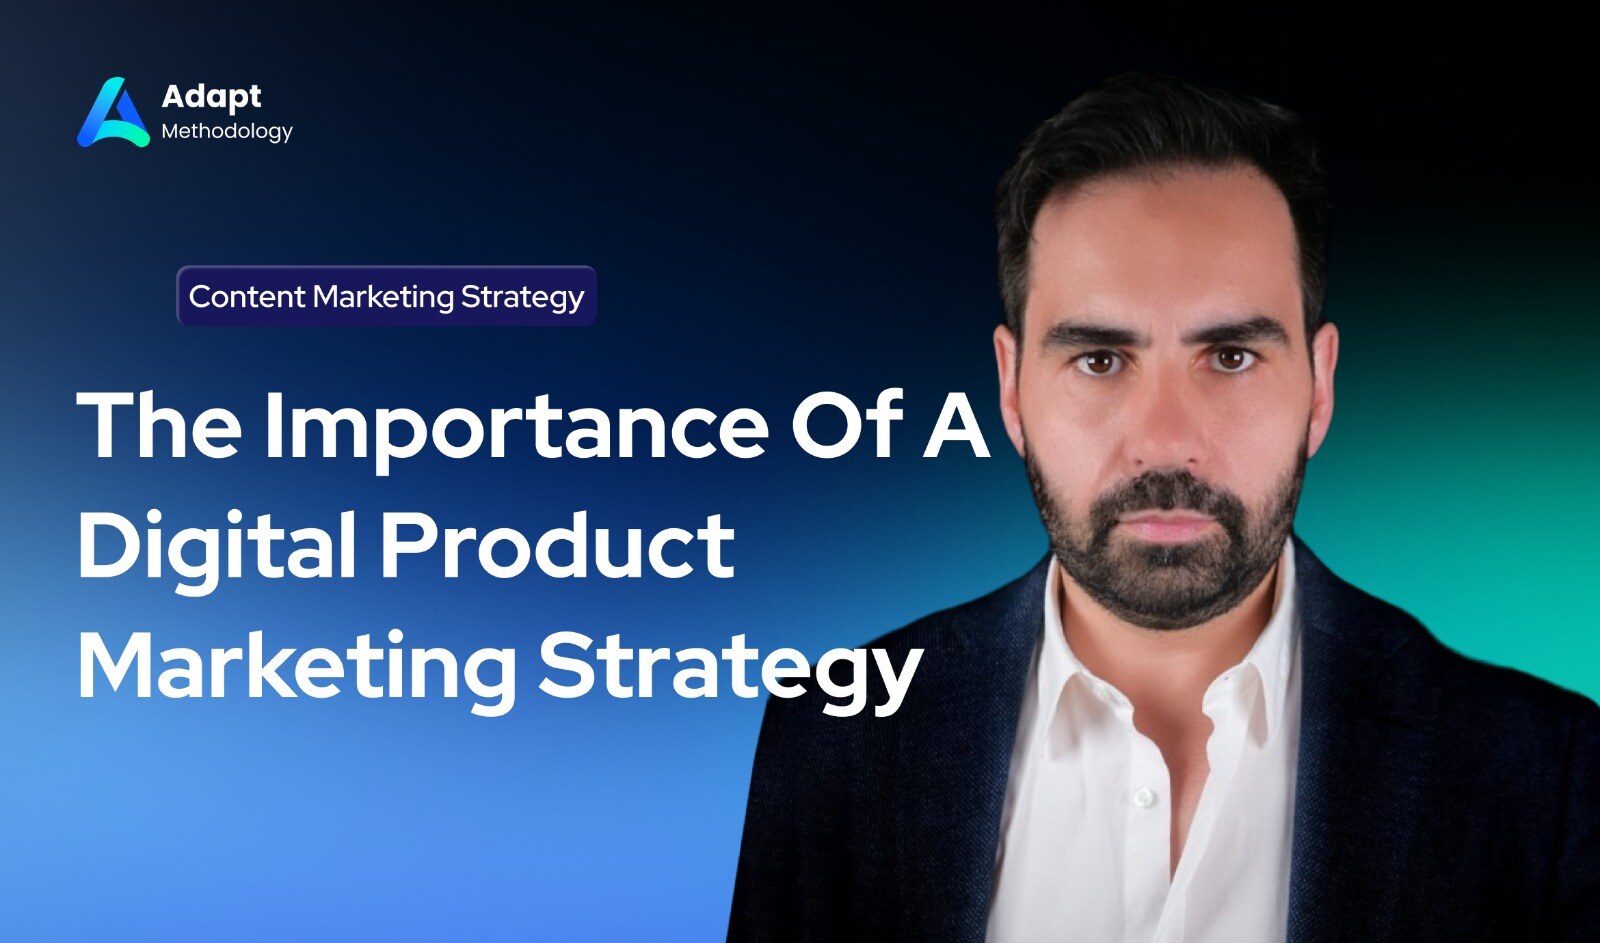 Digital Product Marketing Strategy